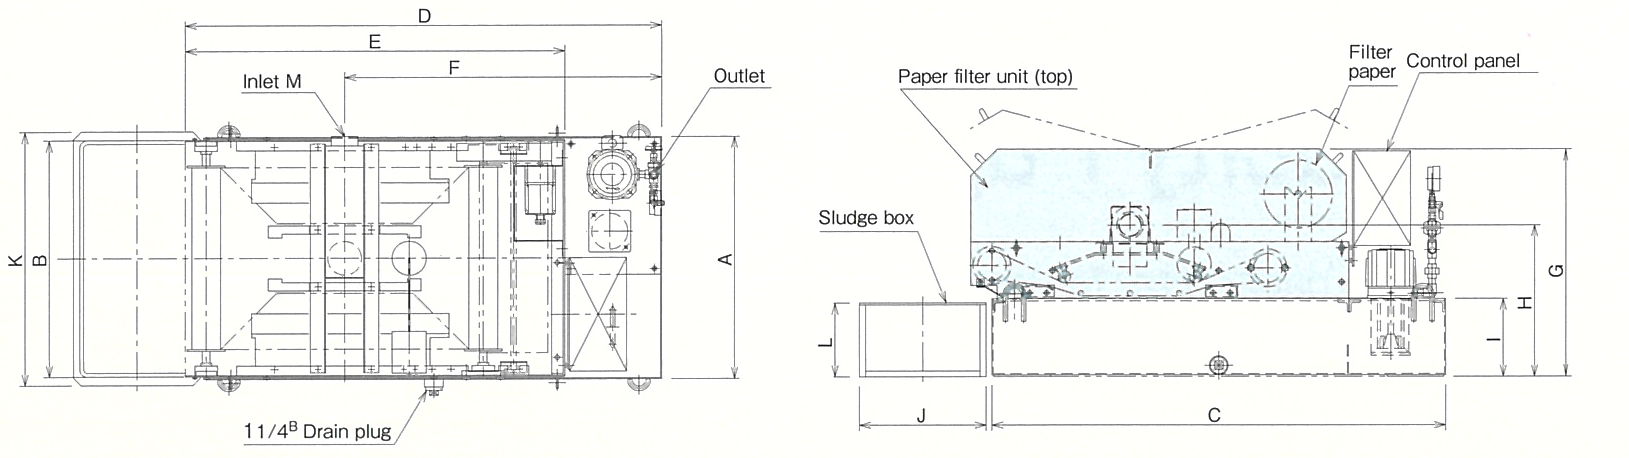 SP series Paper Filter